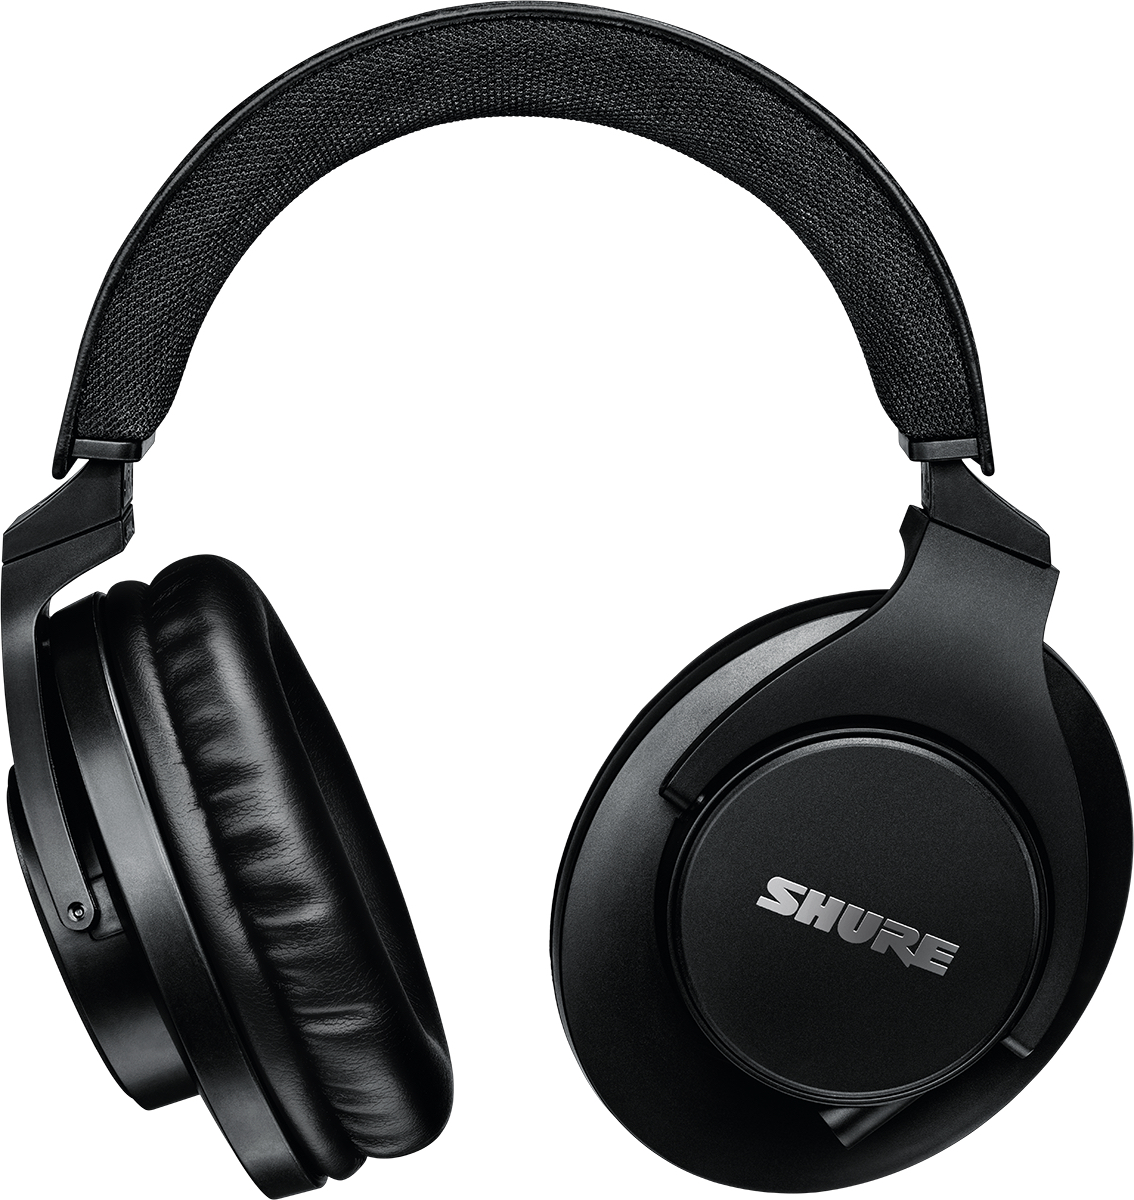 Shure Srh 440a-efs - Closed headset - Variation 1